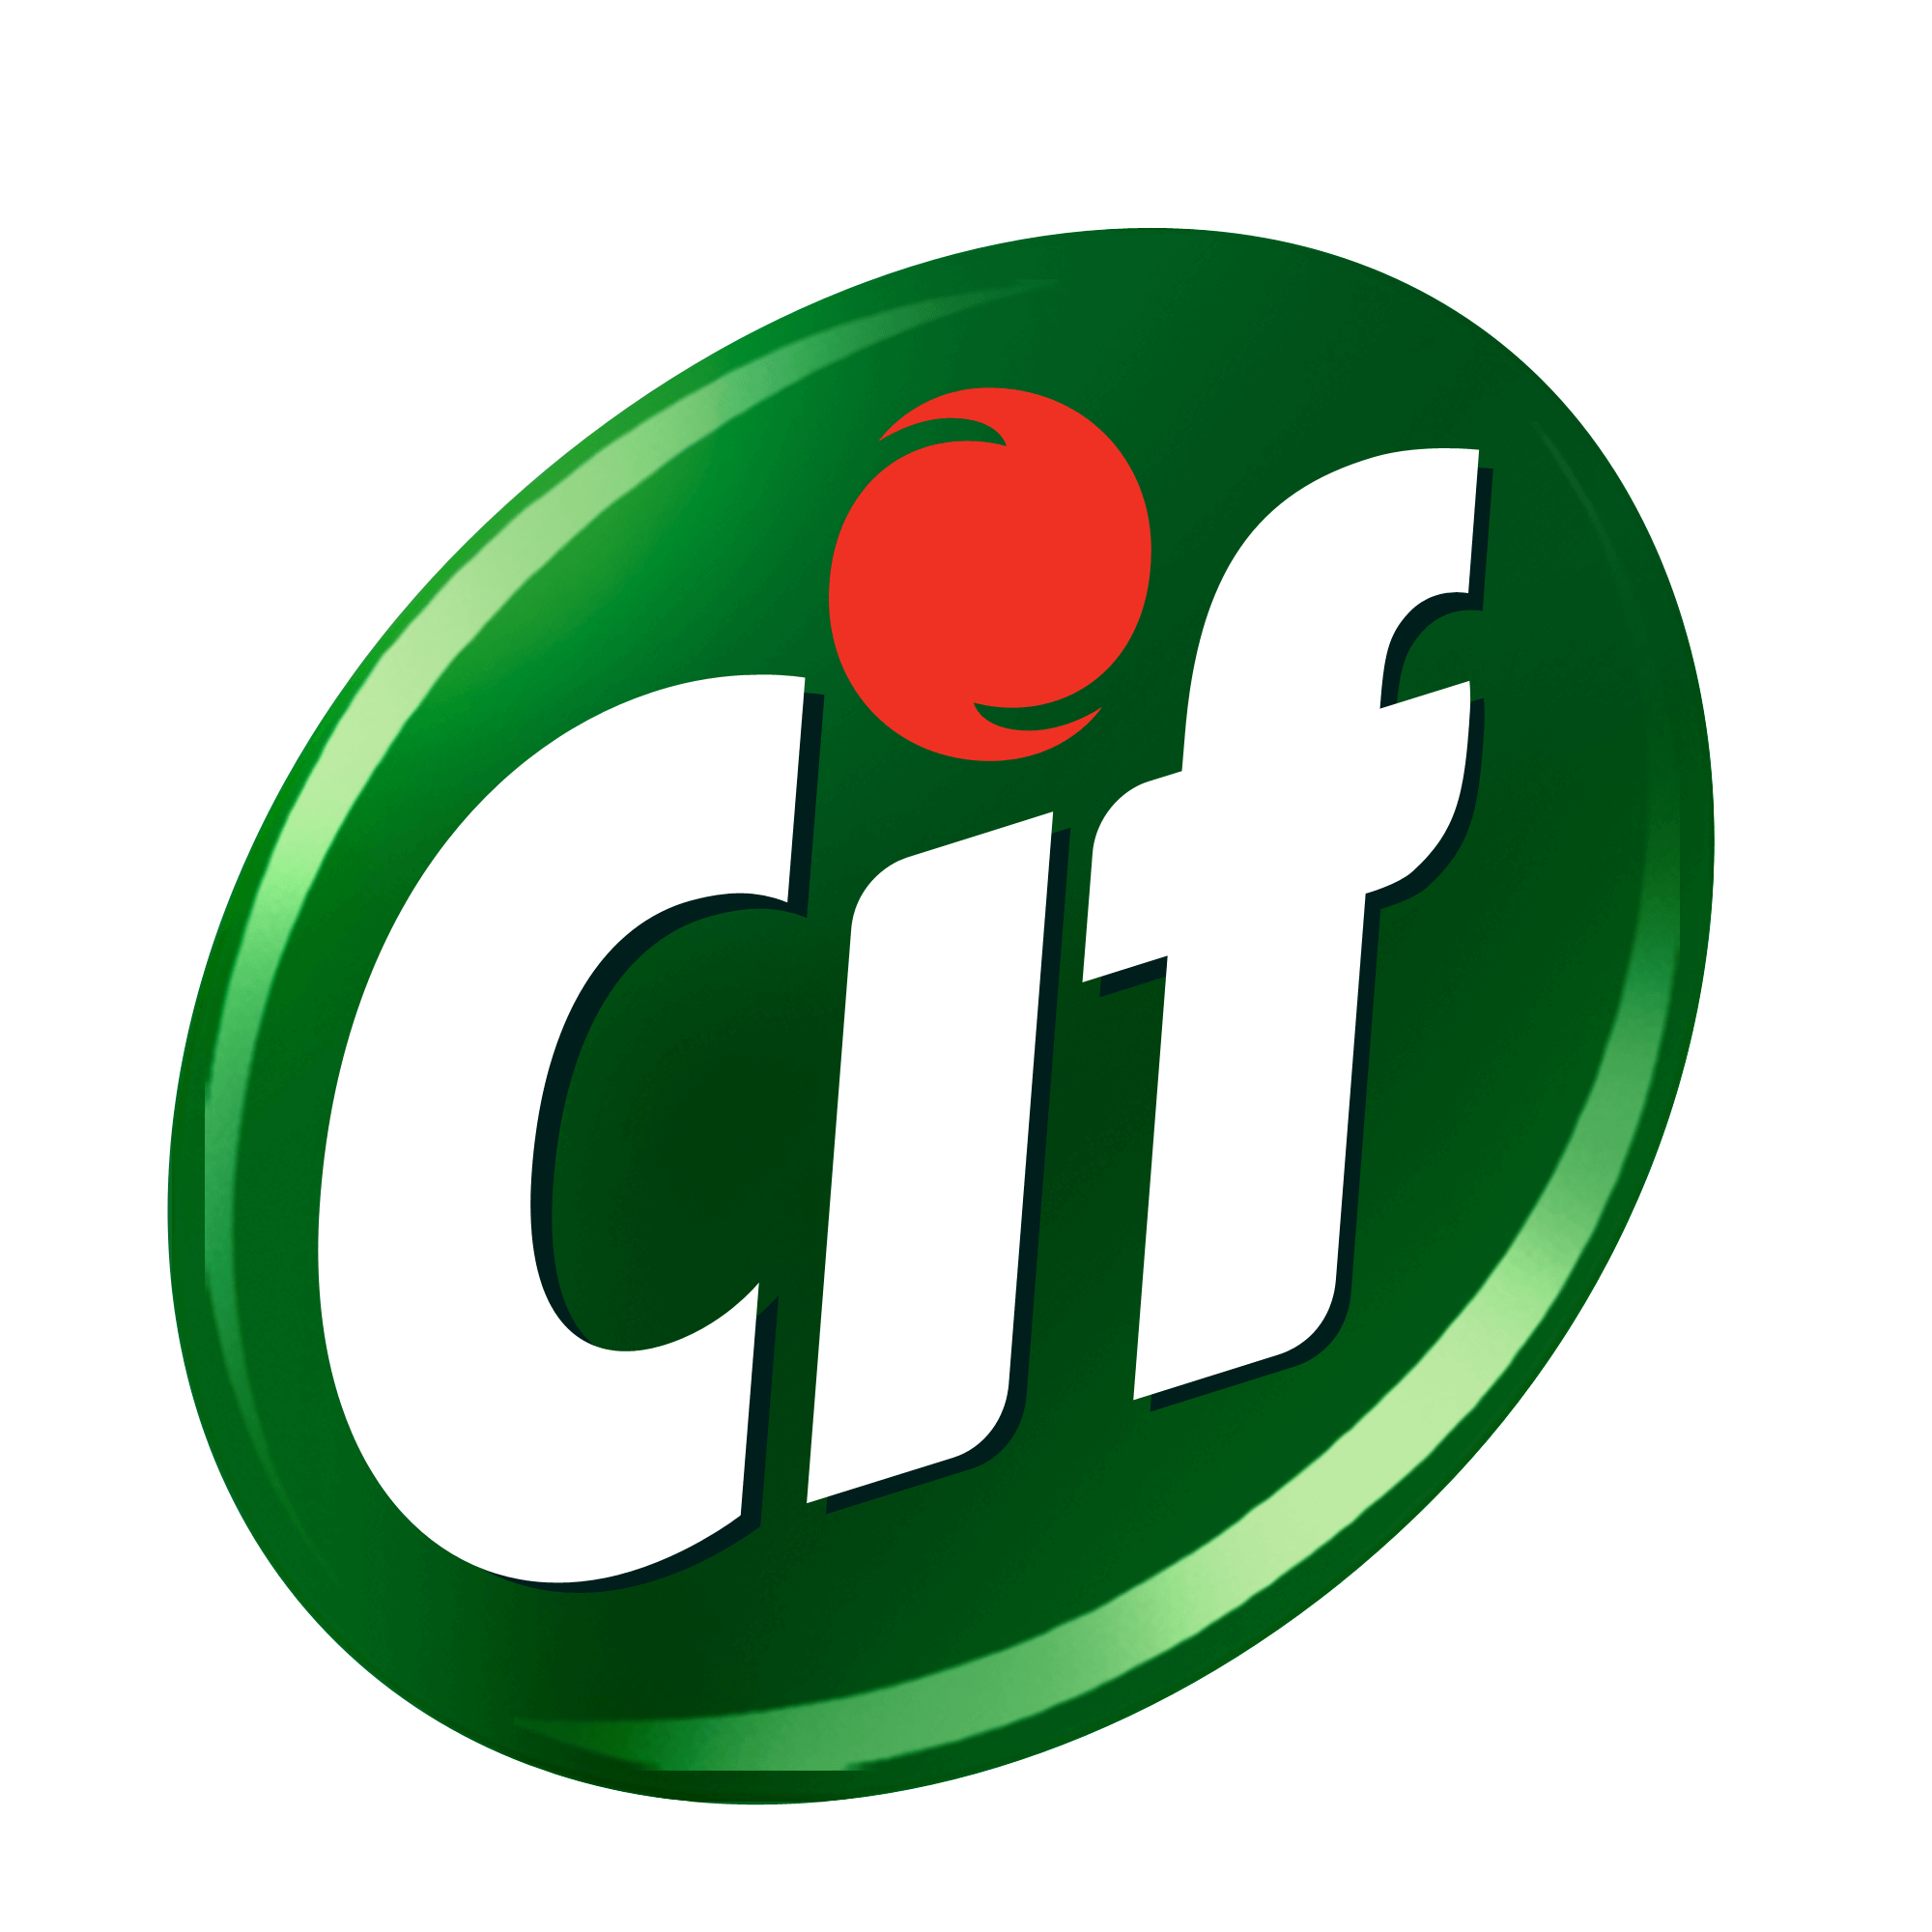 Brand Cif